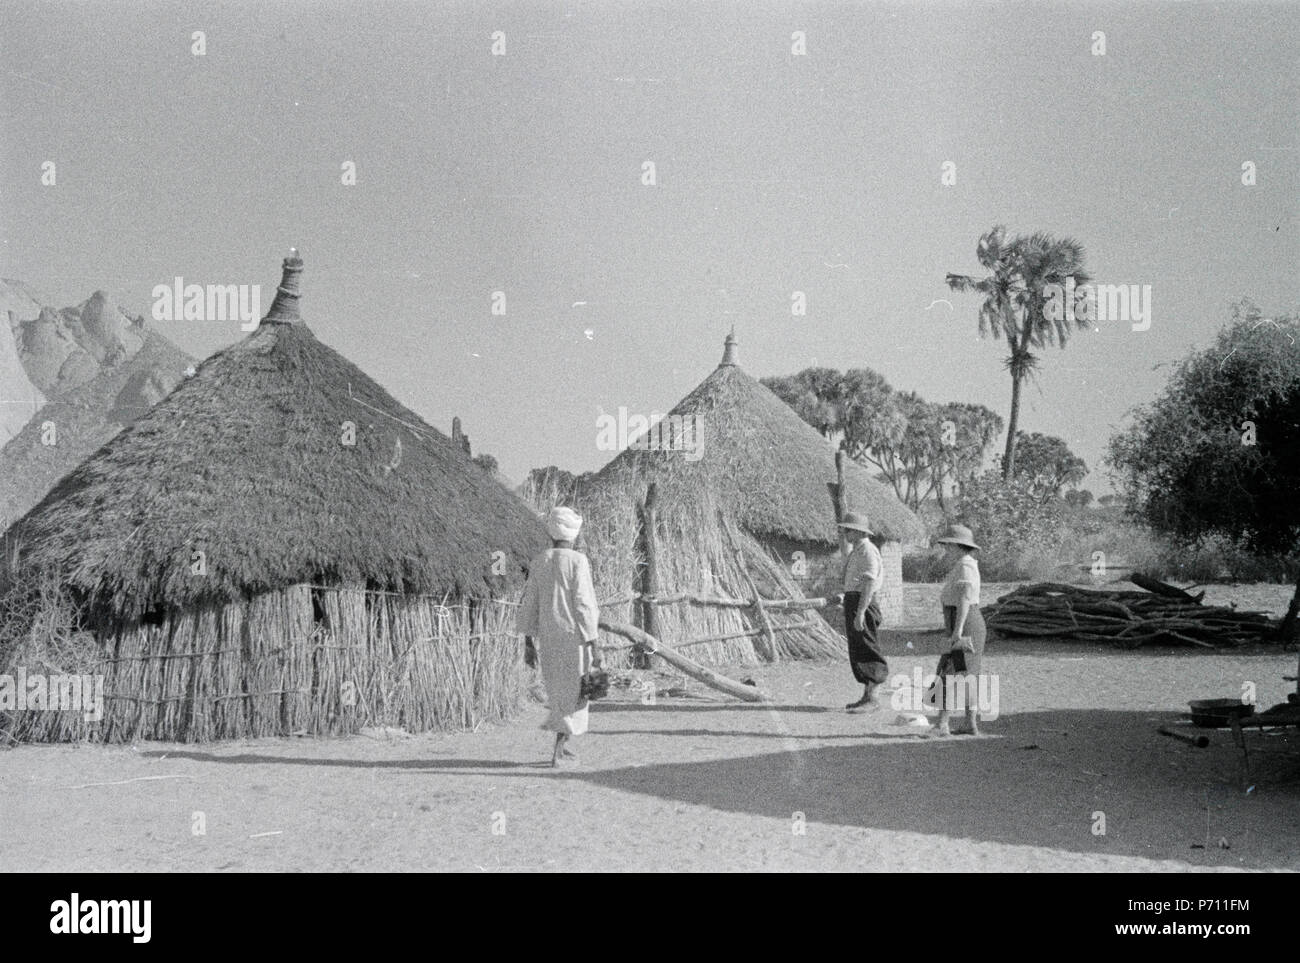 48 ETH-BIB-im Dorf Sudan-Abessinienflug Besucher en 1934 LBS MH02-22-0934 Foto de stock